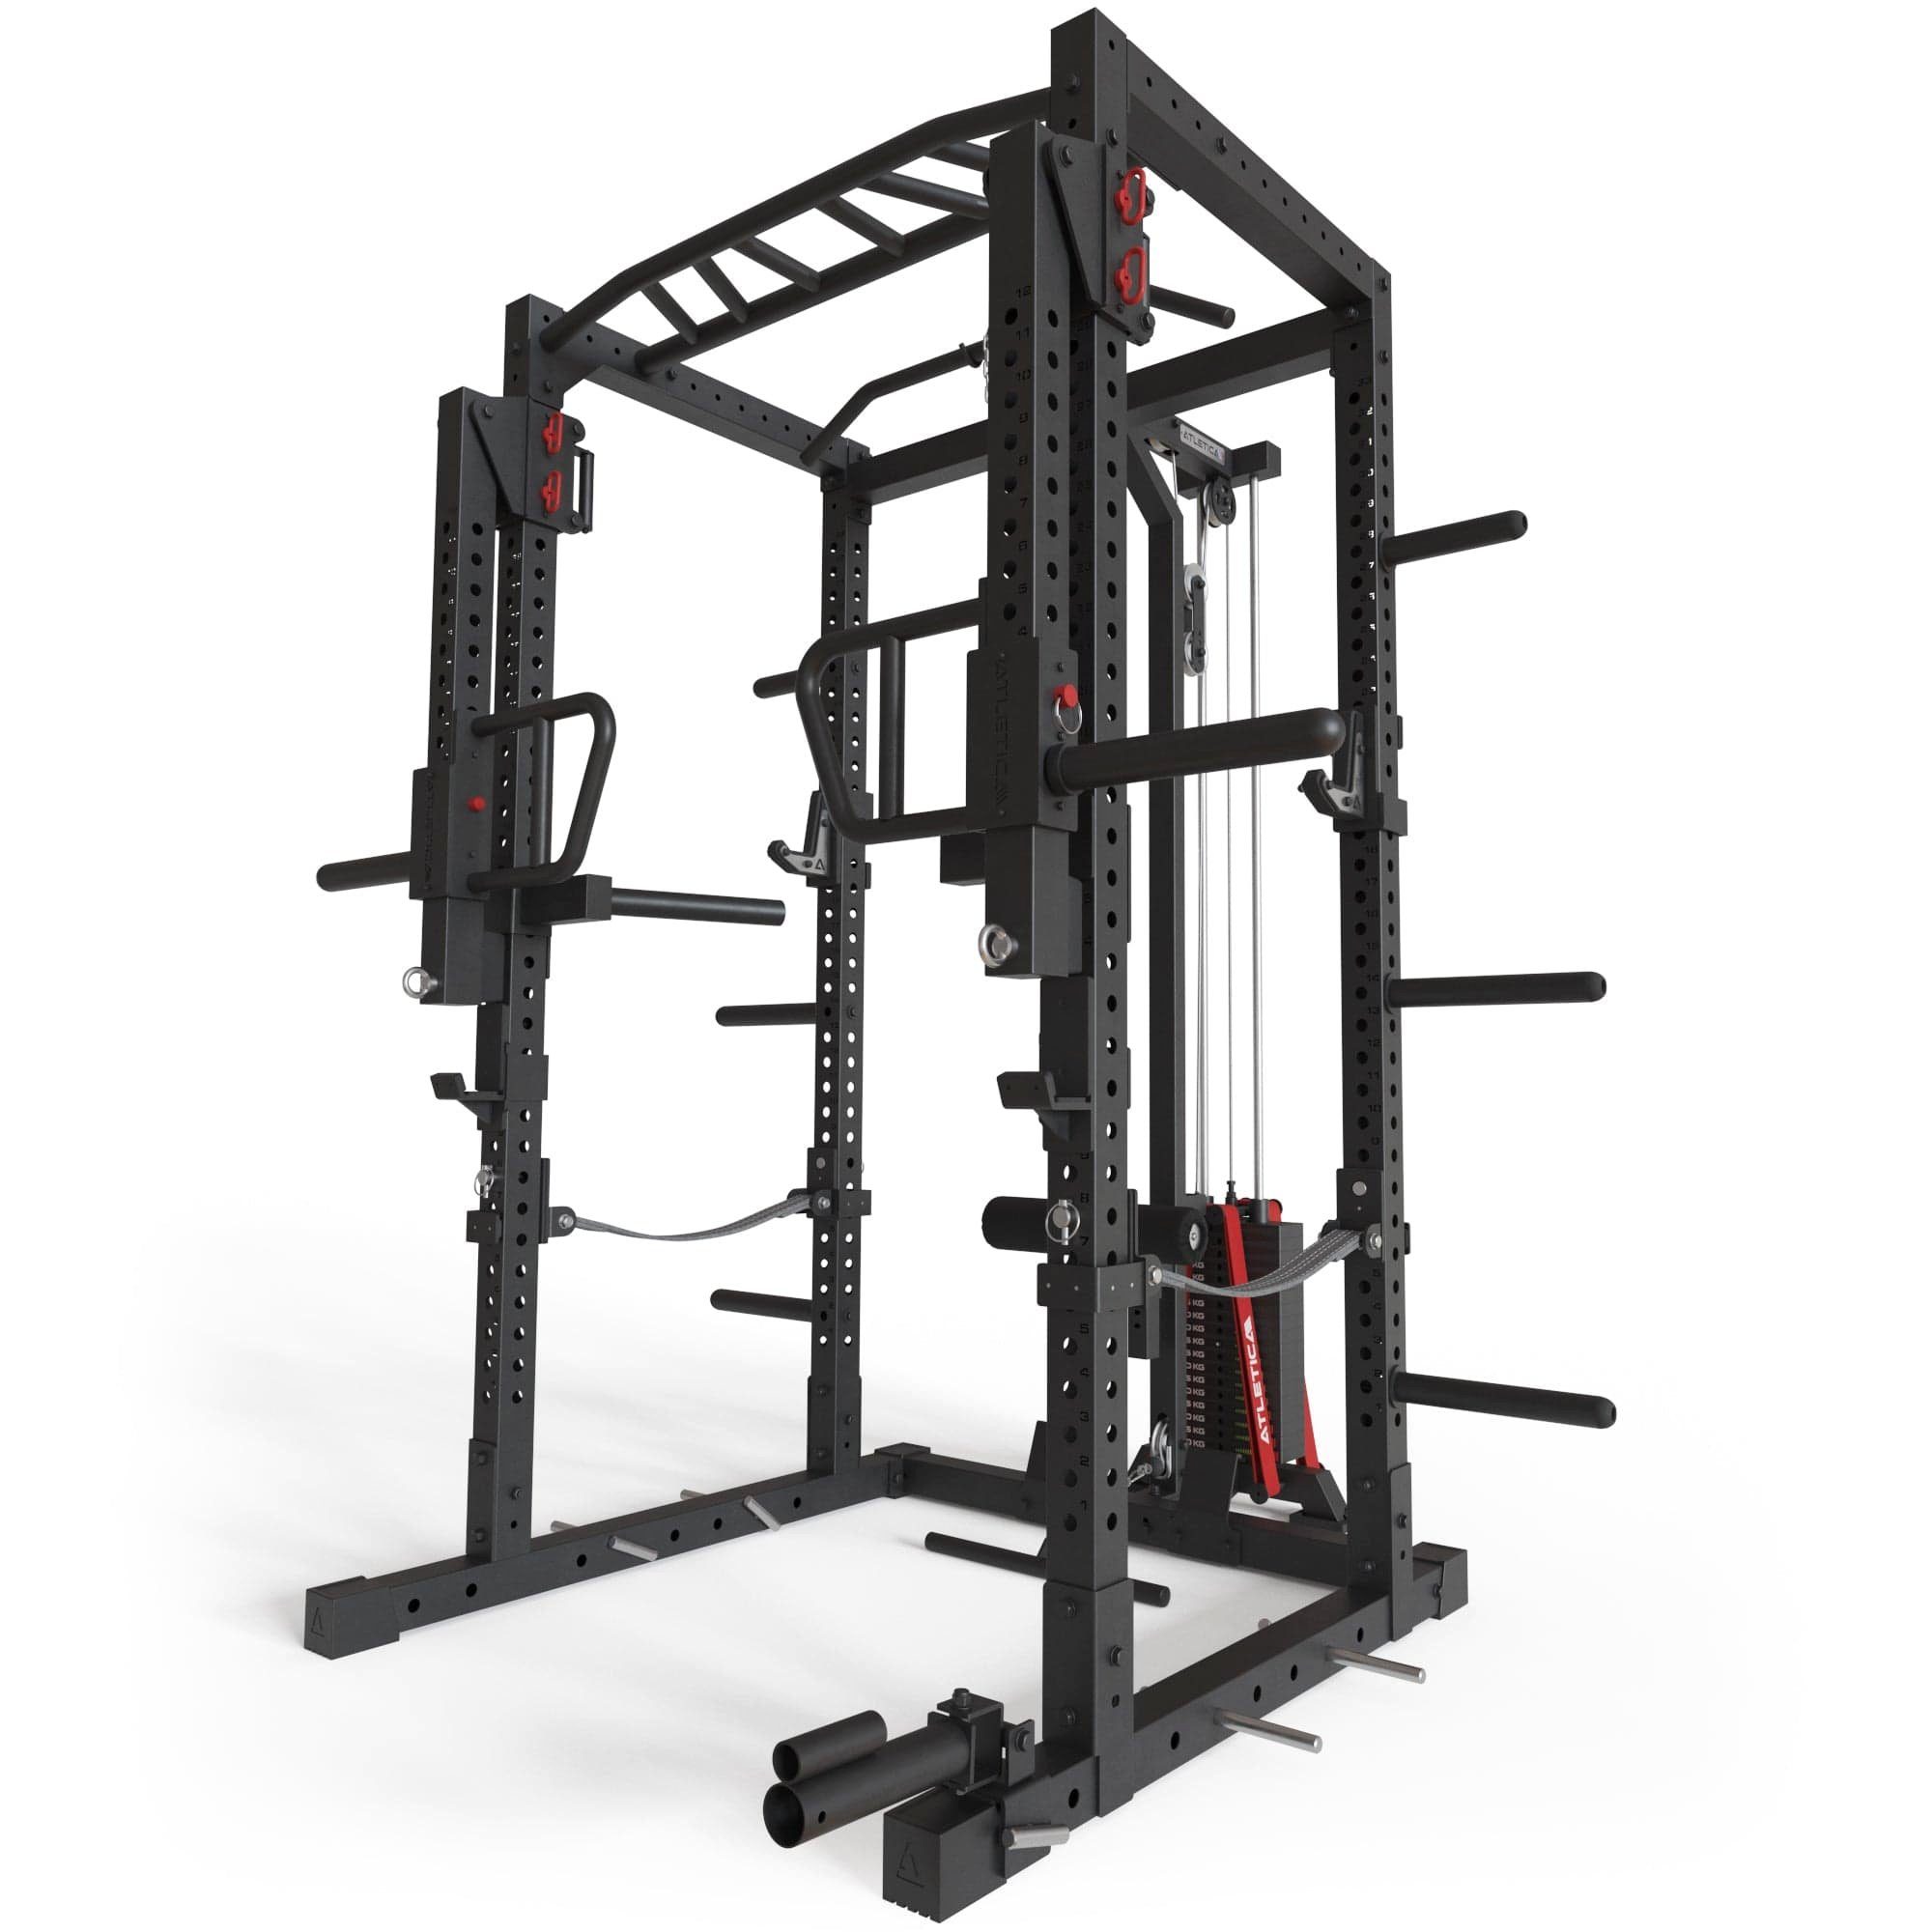 ATLETICA Power Rack R7-Helix Power Rack, 90kg oder 120kg Stack Weight | Power Racks